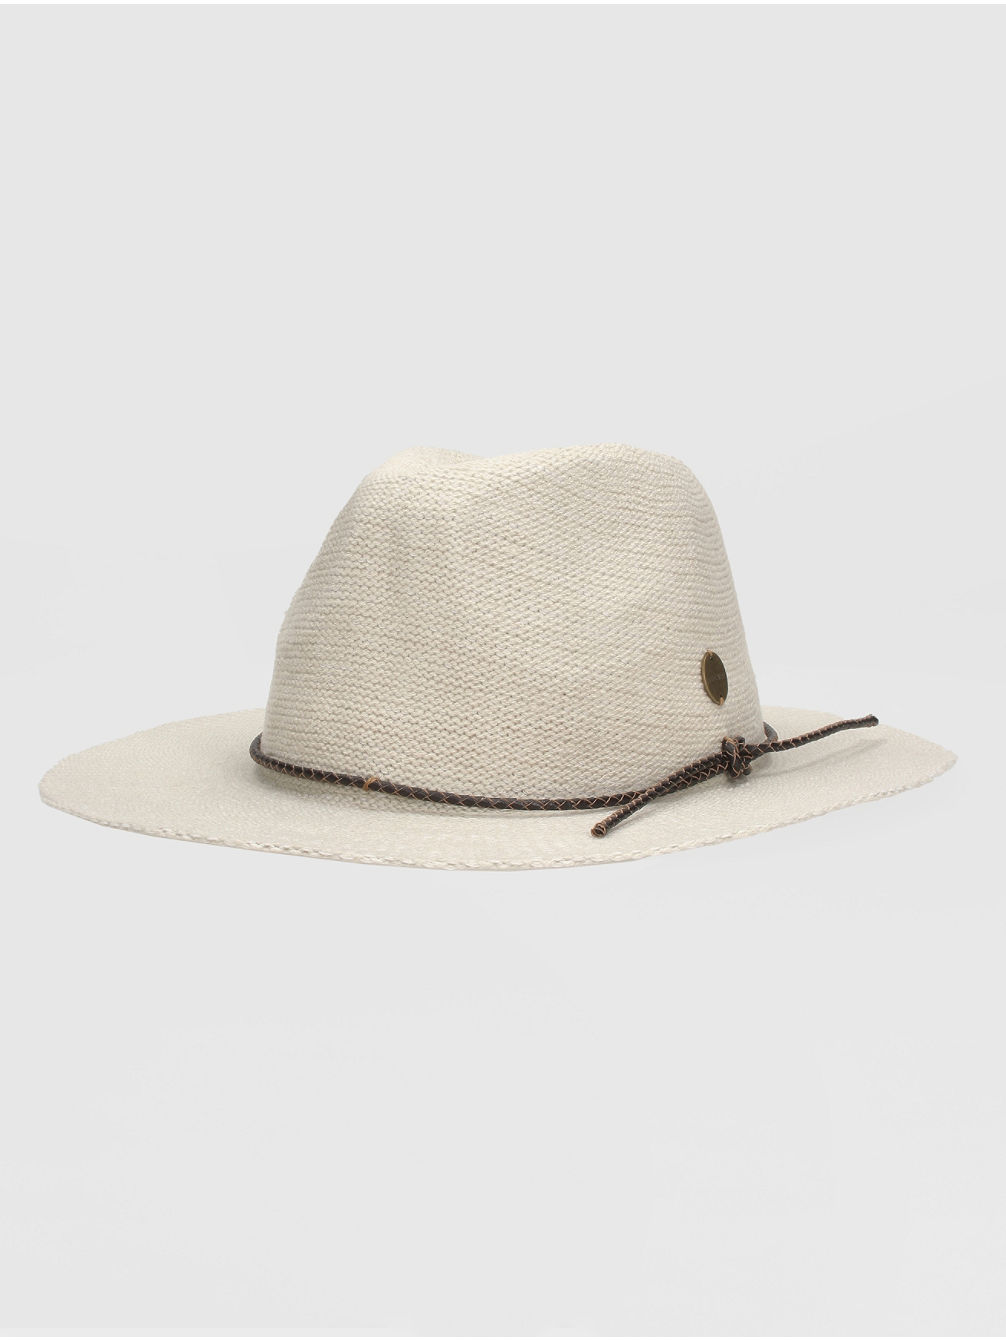 Spice Temple Knit Panama Hattu